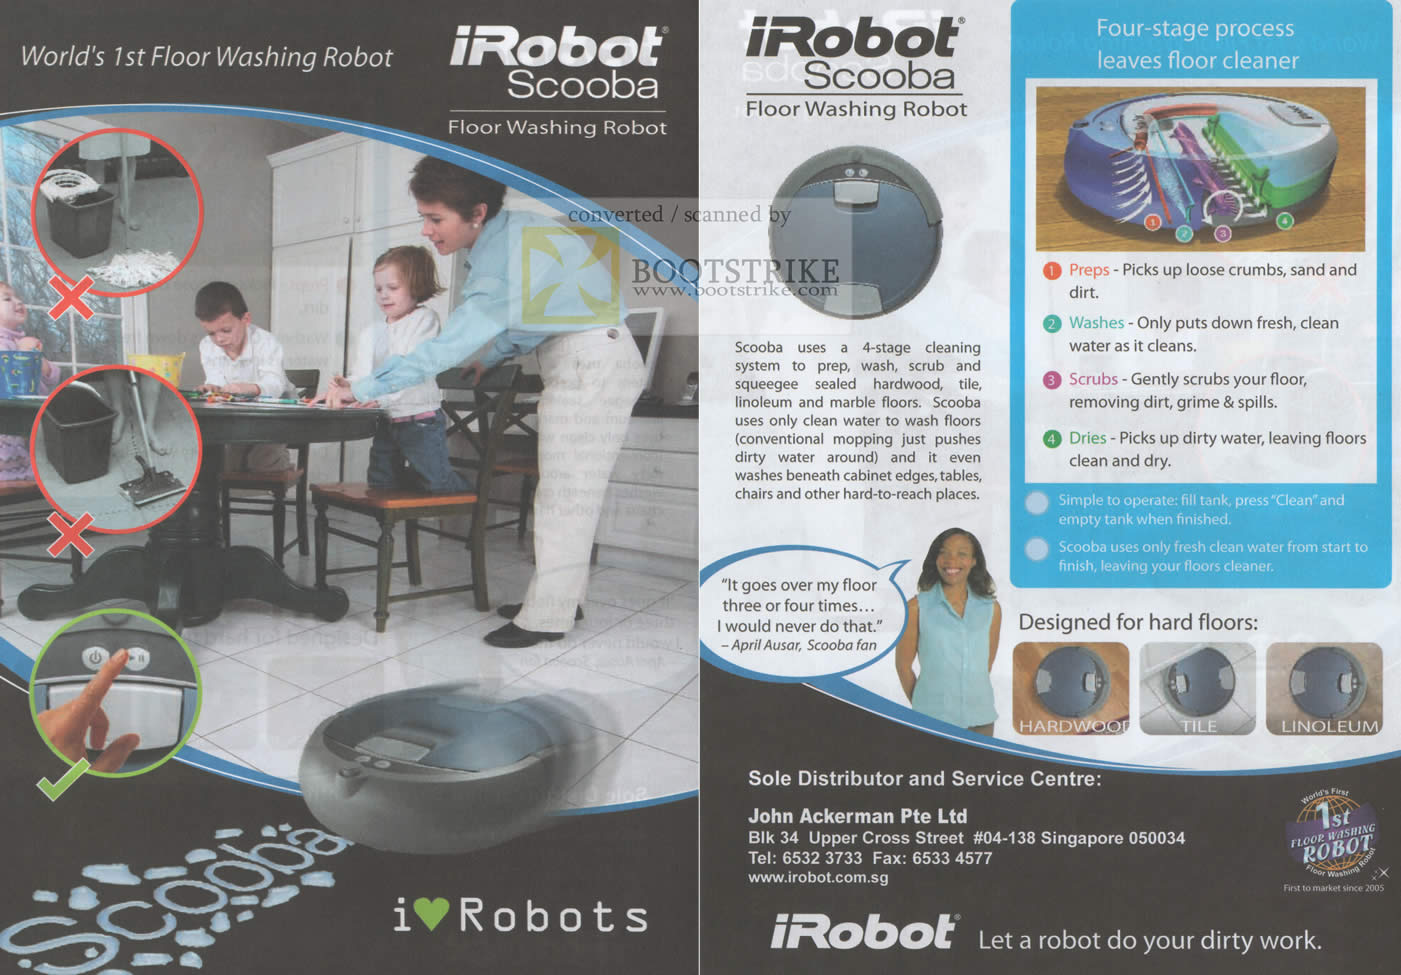 IT Show 2010 price list image brochure of IRobot Scooba Floor Washing Robot